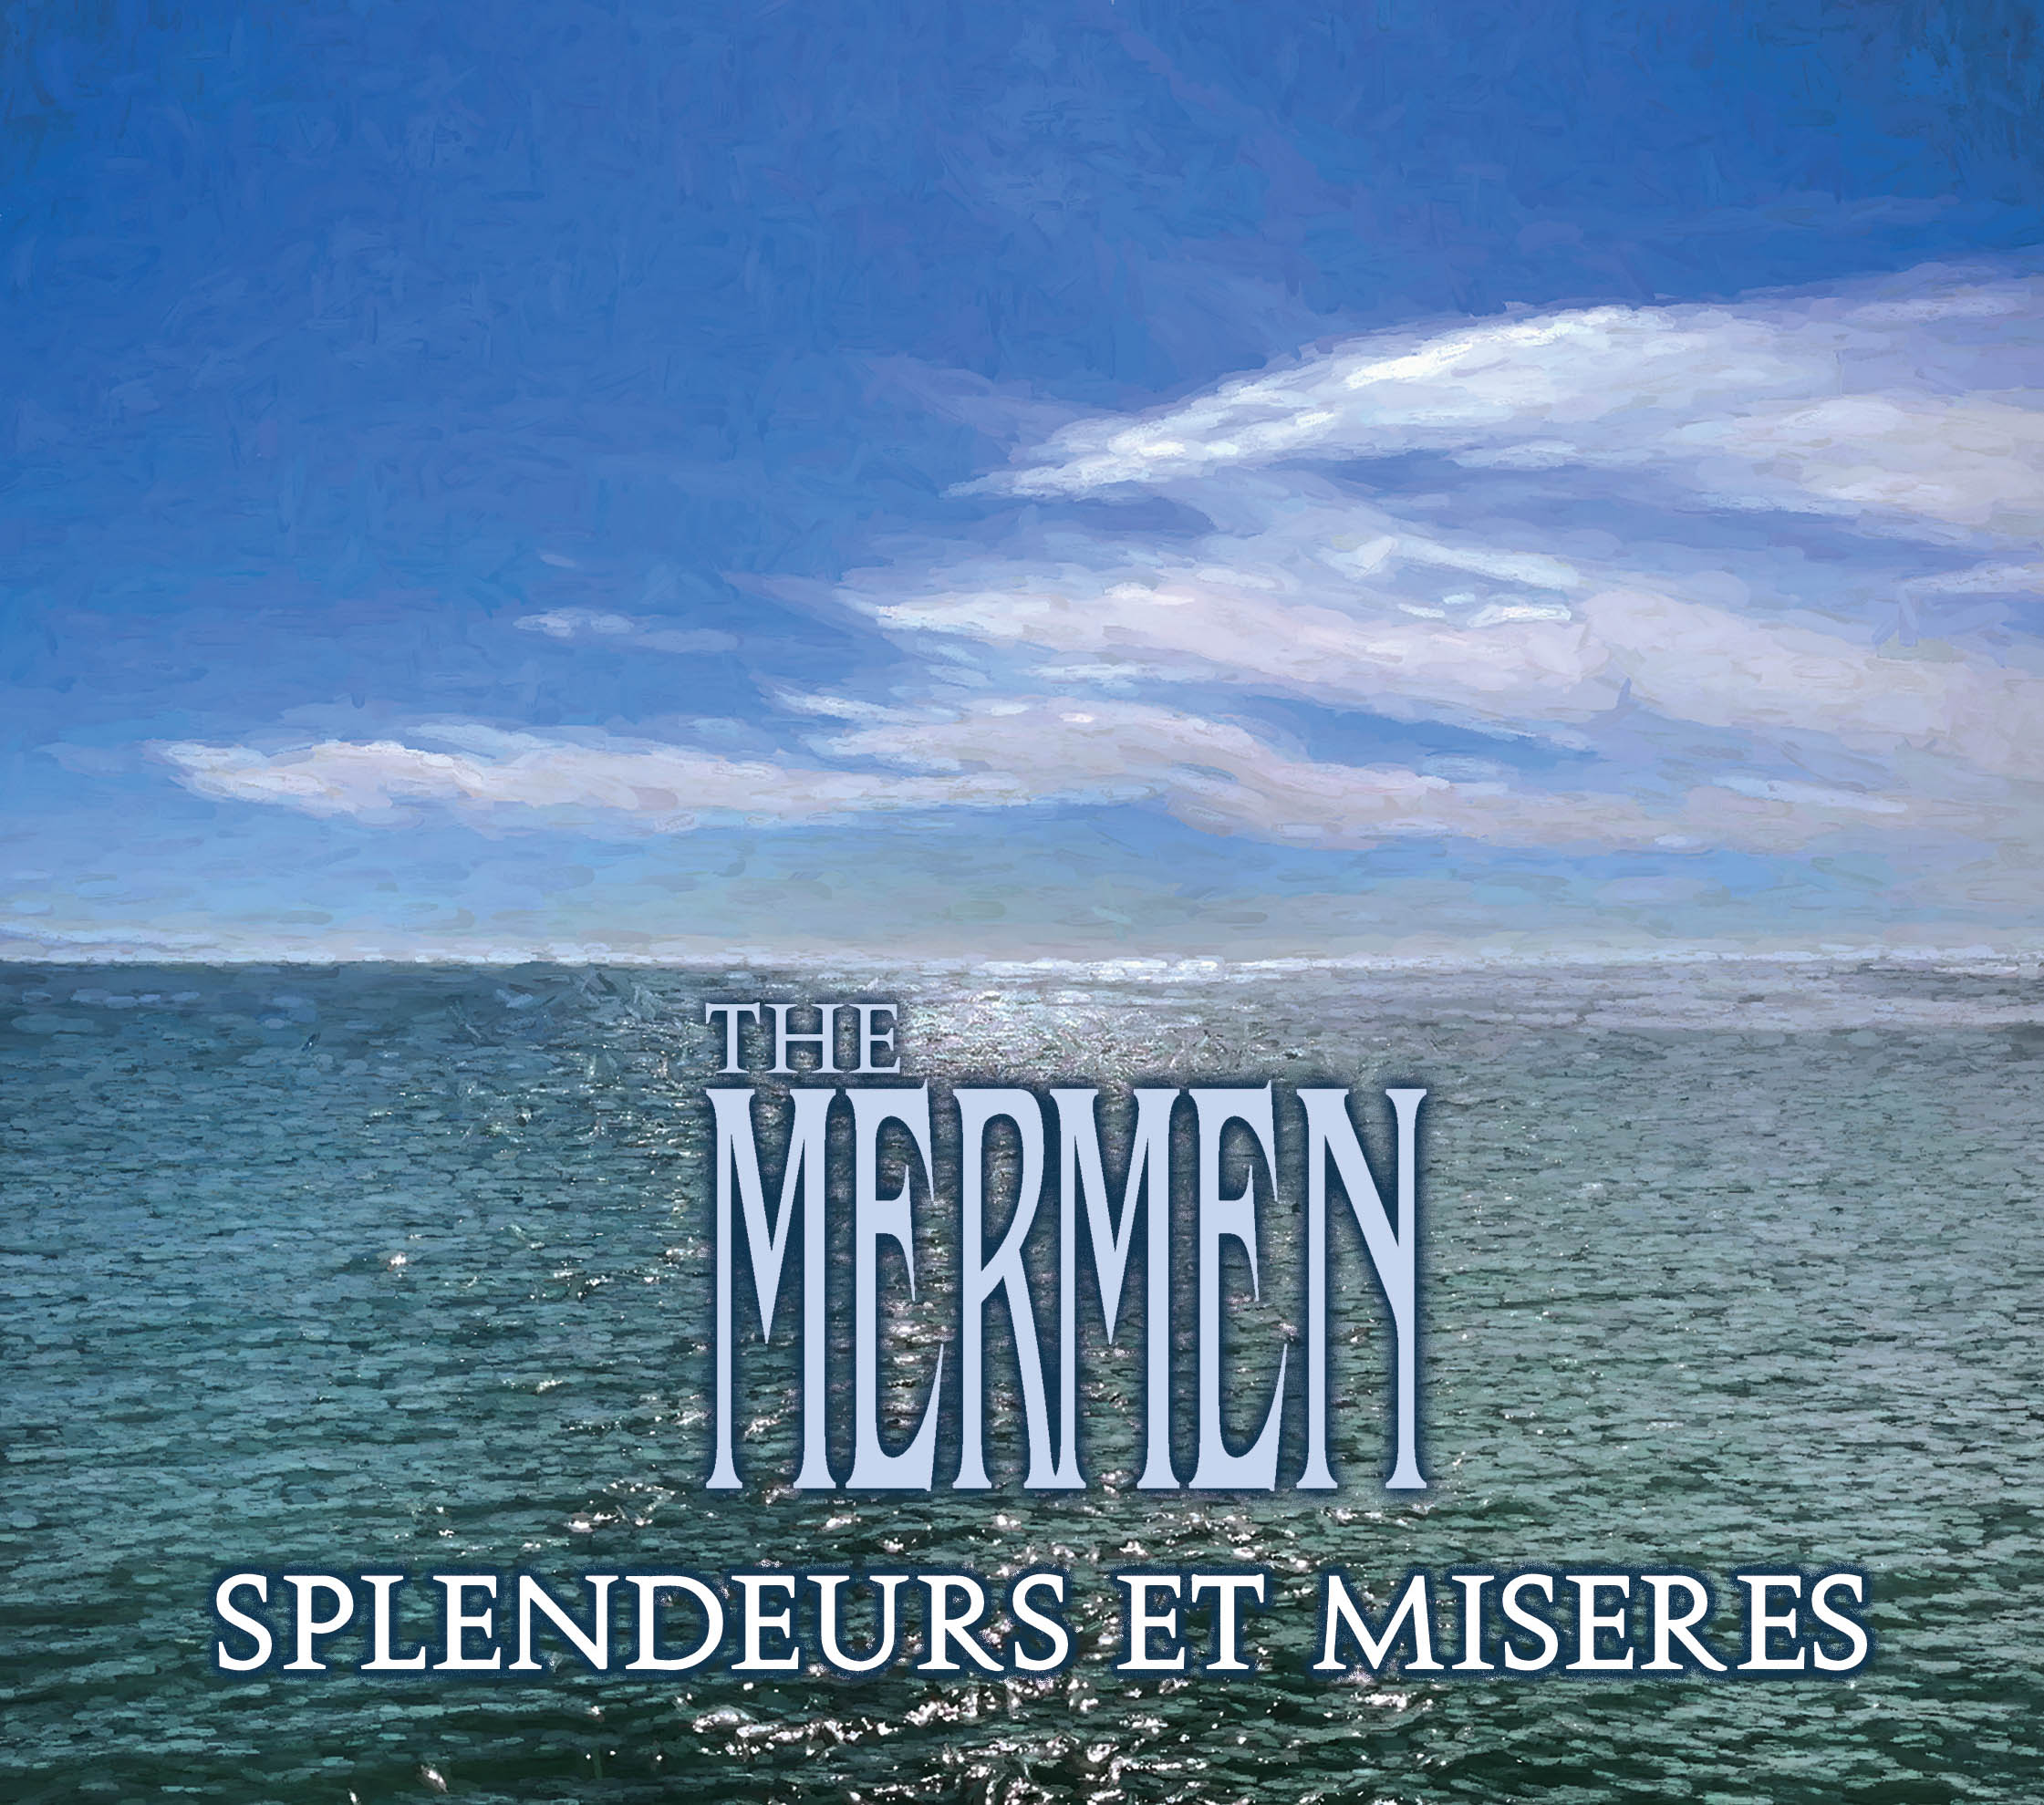 THE MERMEN - SPLENDEURS ET MISERES - cover front. Photos by Jim Thomas. Cover design by Sienna Digital.